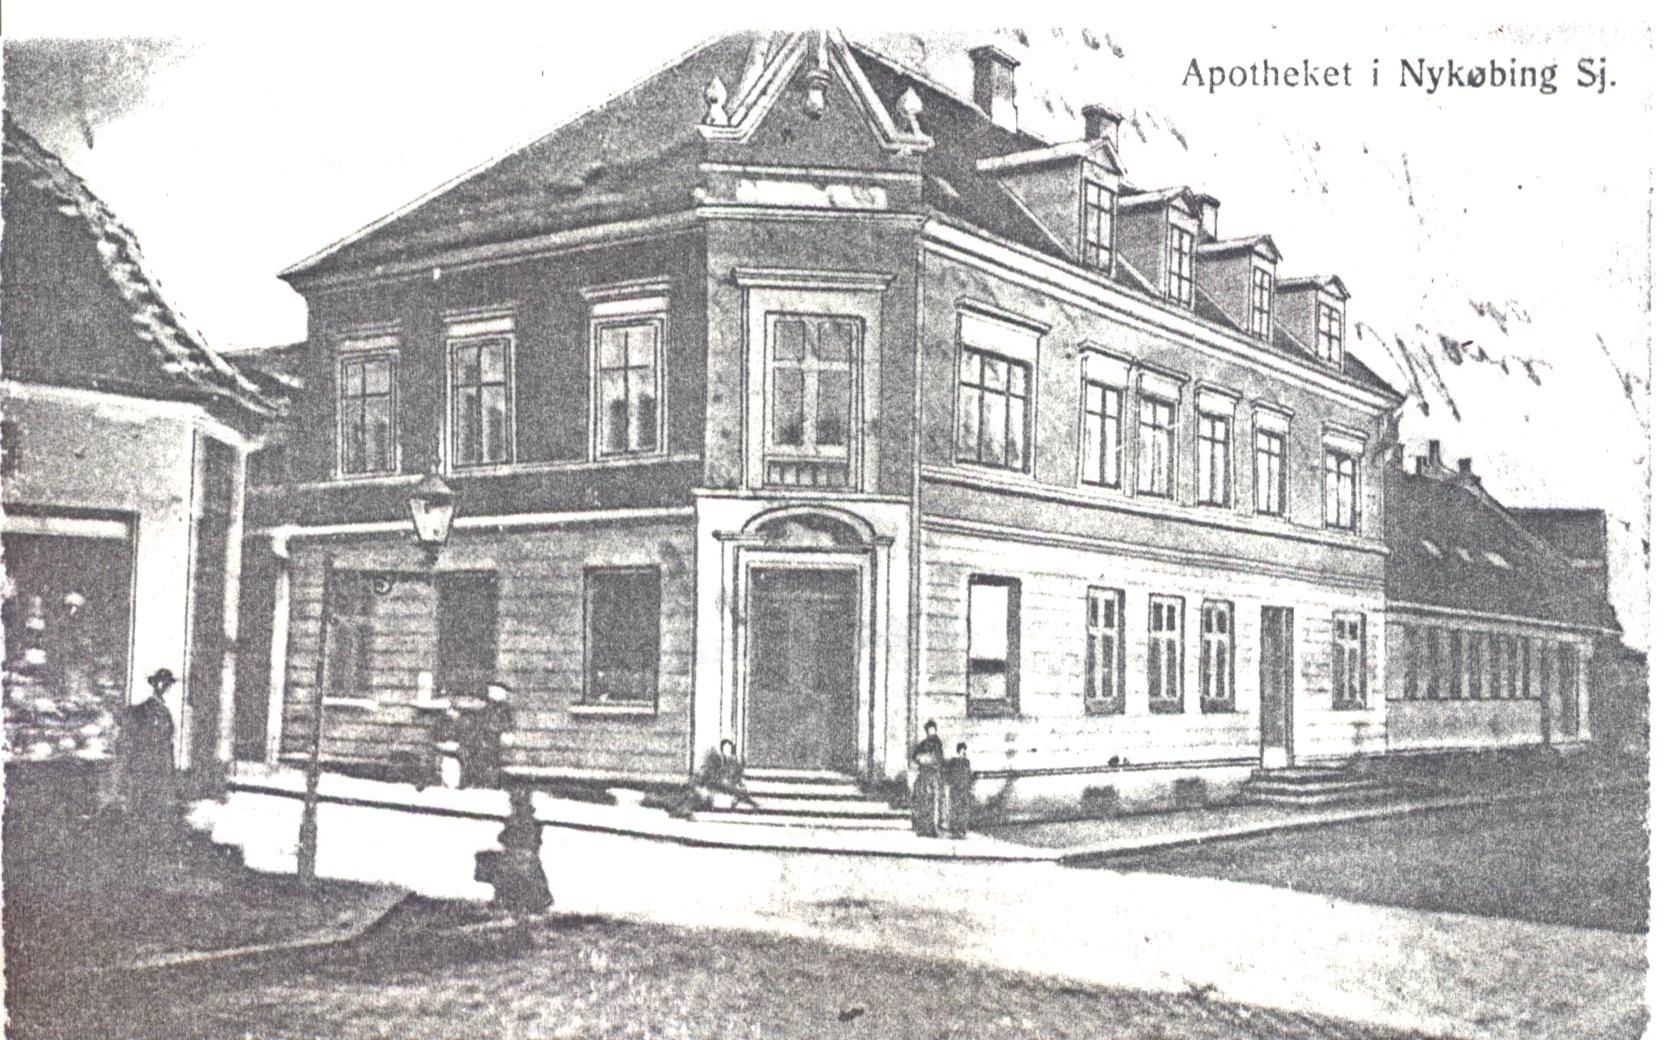 Apoteket i Nykøbing Sj. - ca. 1910 (B90102)